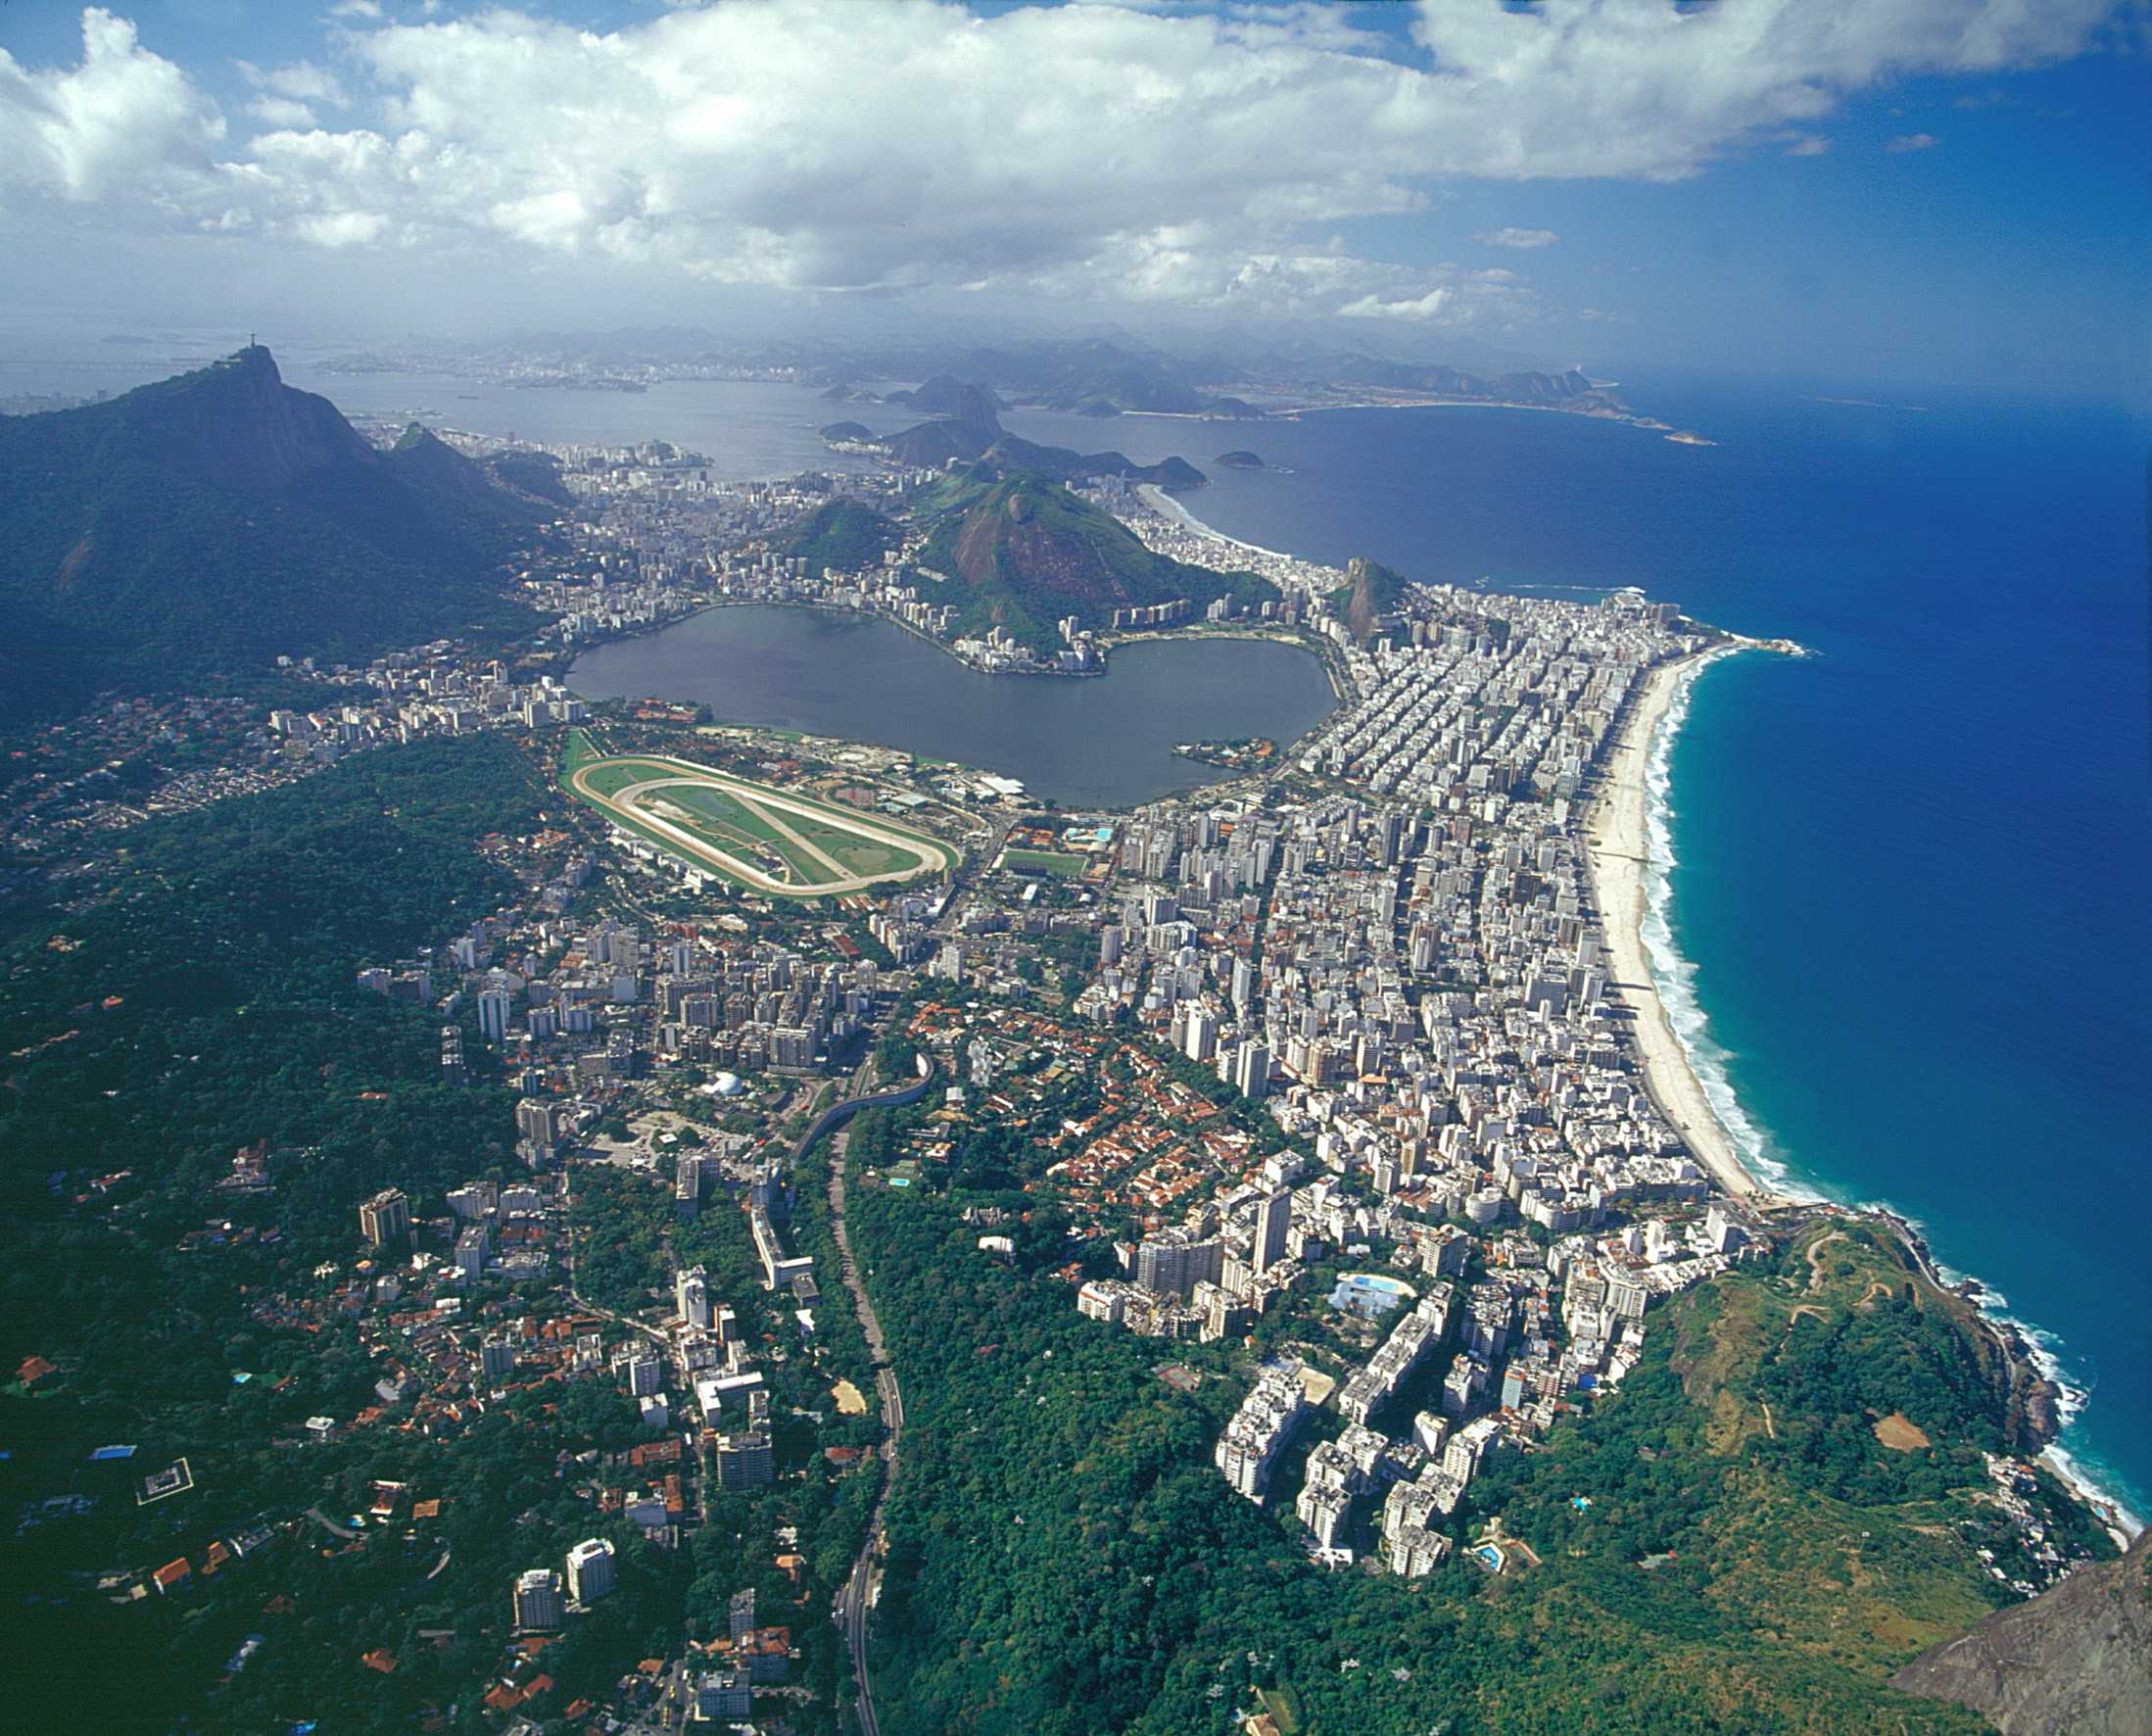 Rio d. Бразилия Рио де Жанейро. Рио-де-Жанейро столица Бразилии. Южная Америка Рио де Жанейро. Рио-де-Жанейро фото города.